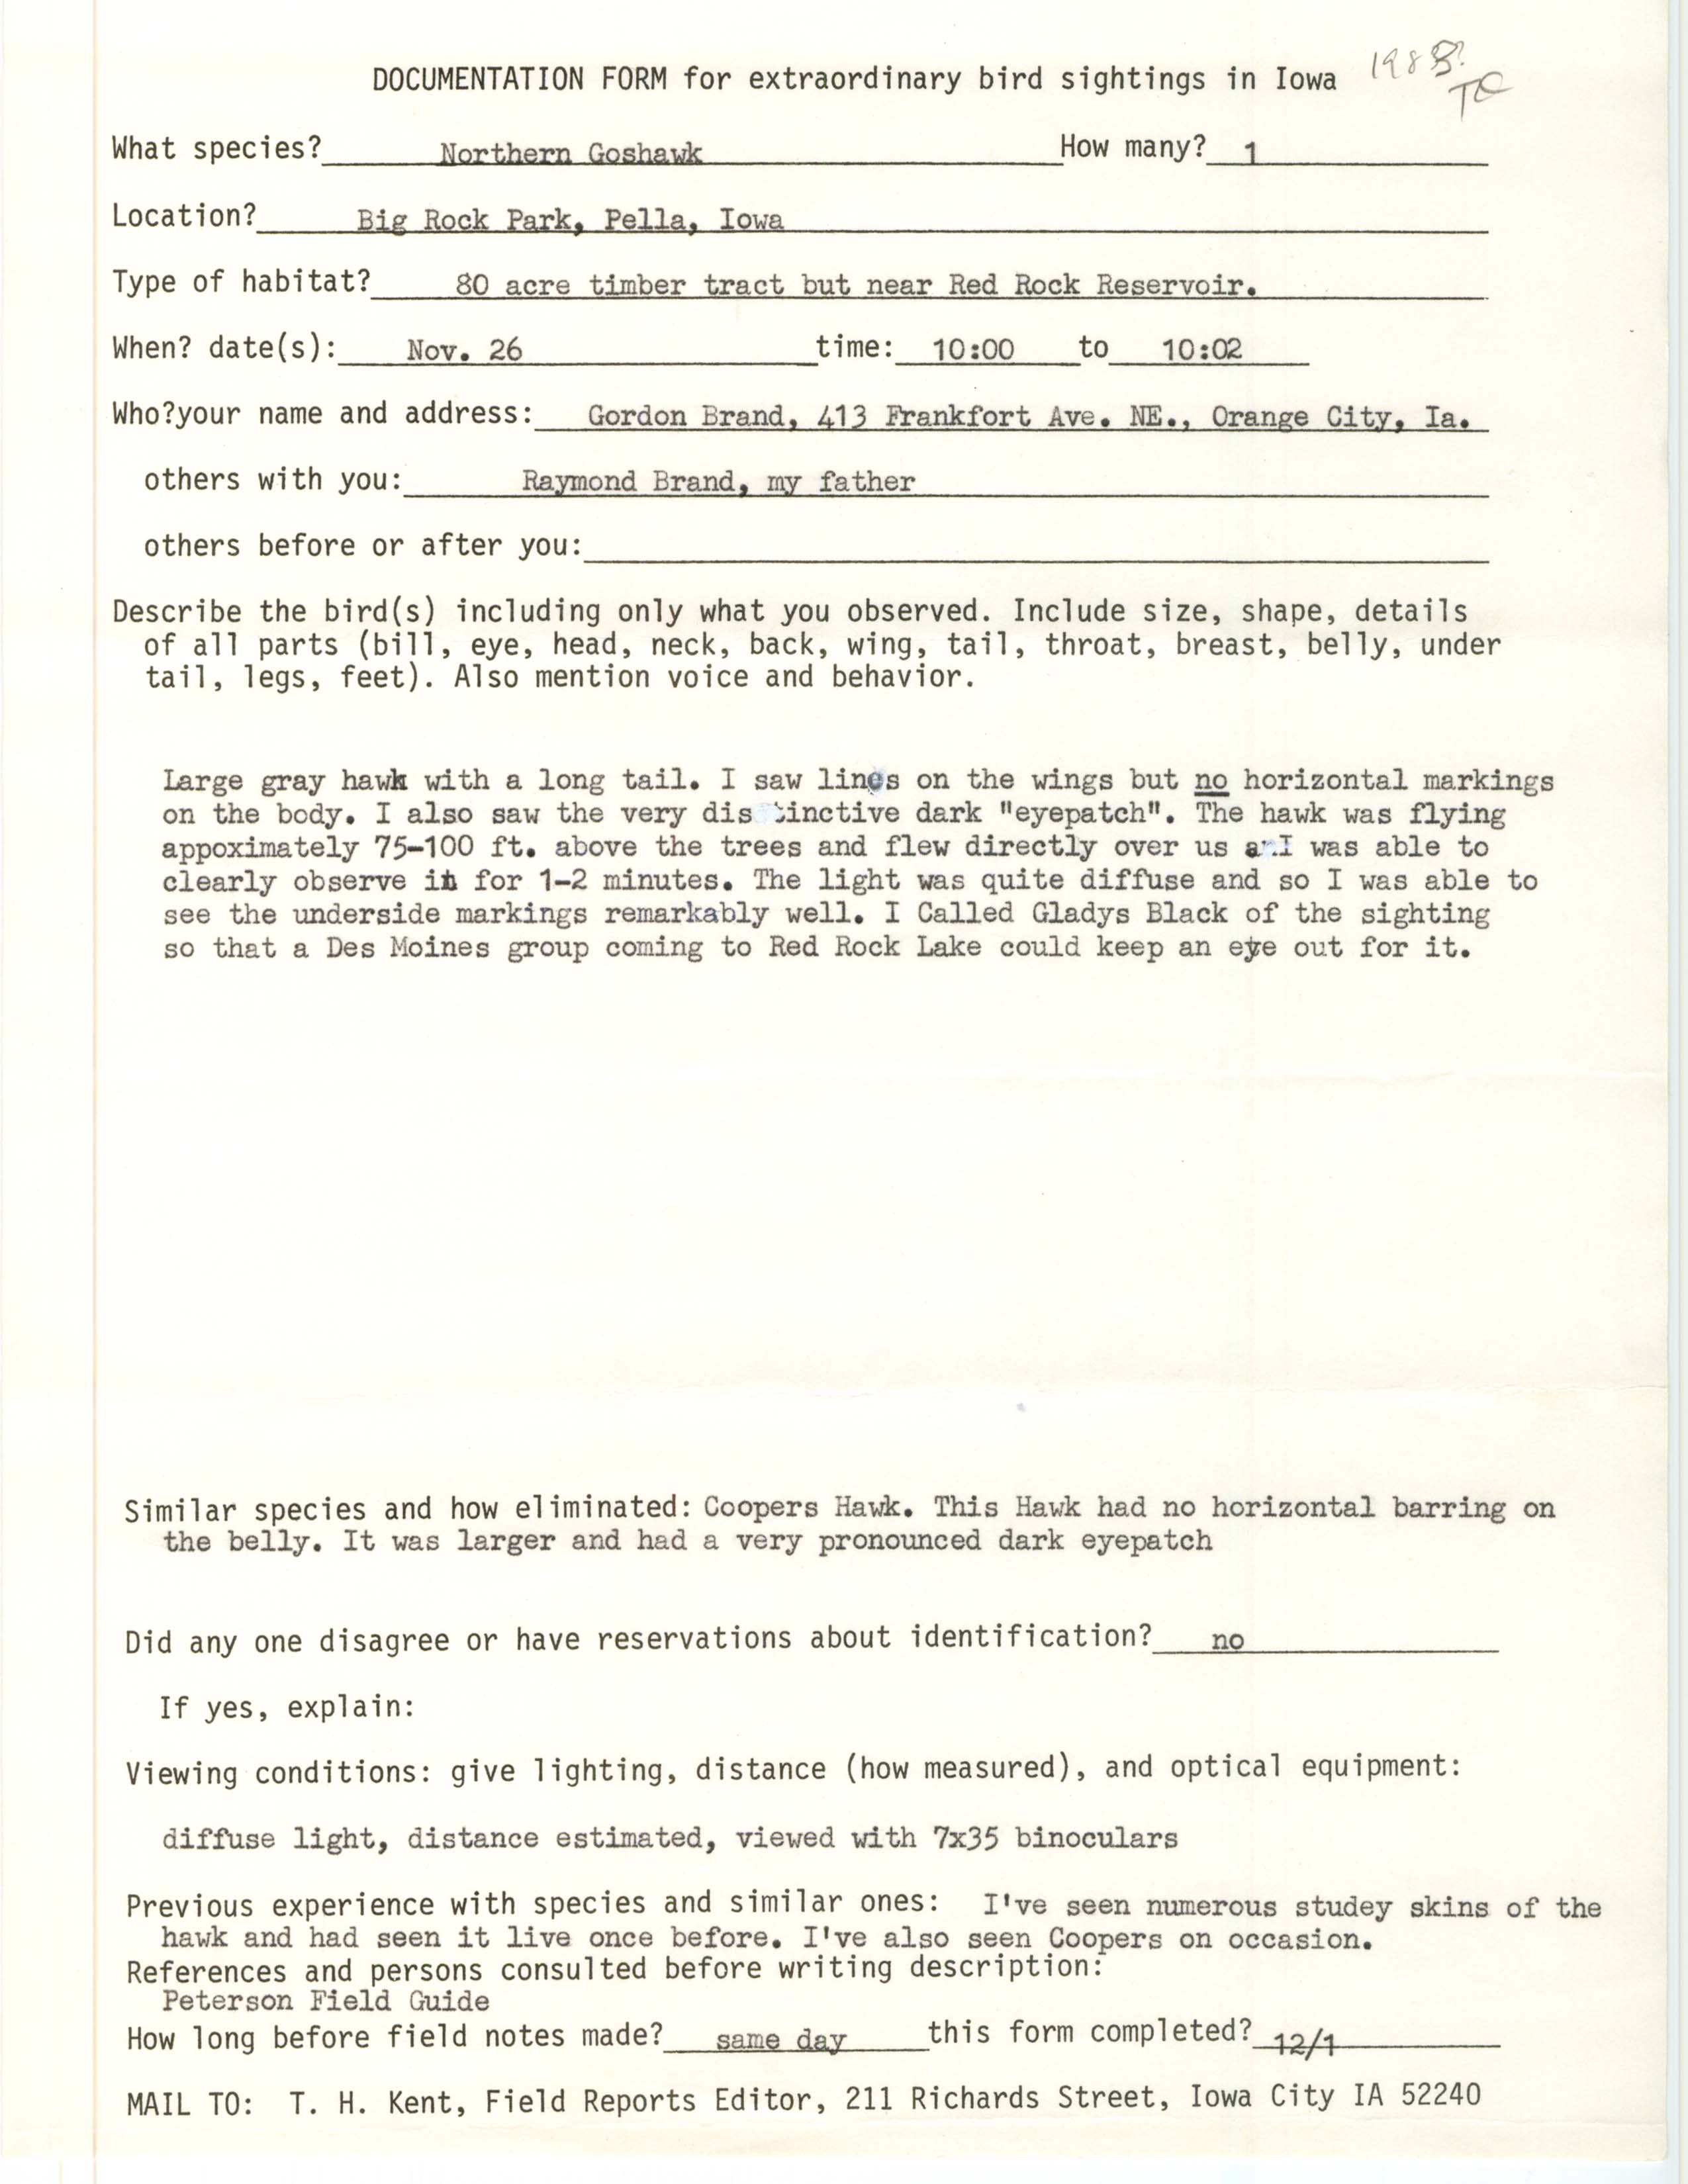 Rare bird documentation form for Northern Goshawk at Big Rock Park in Pella, 1983